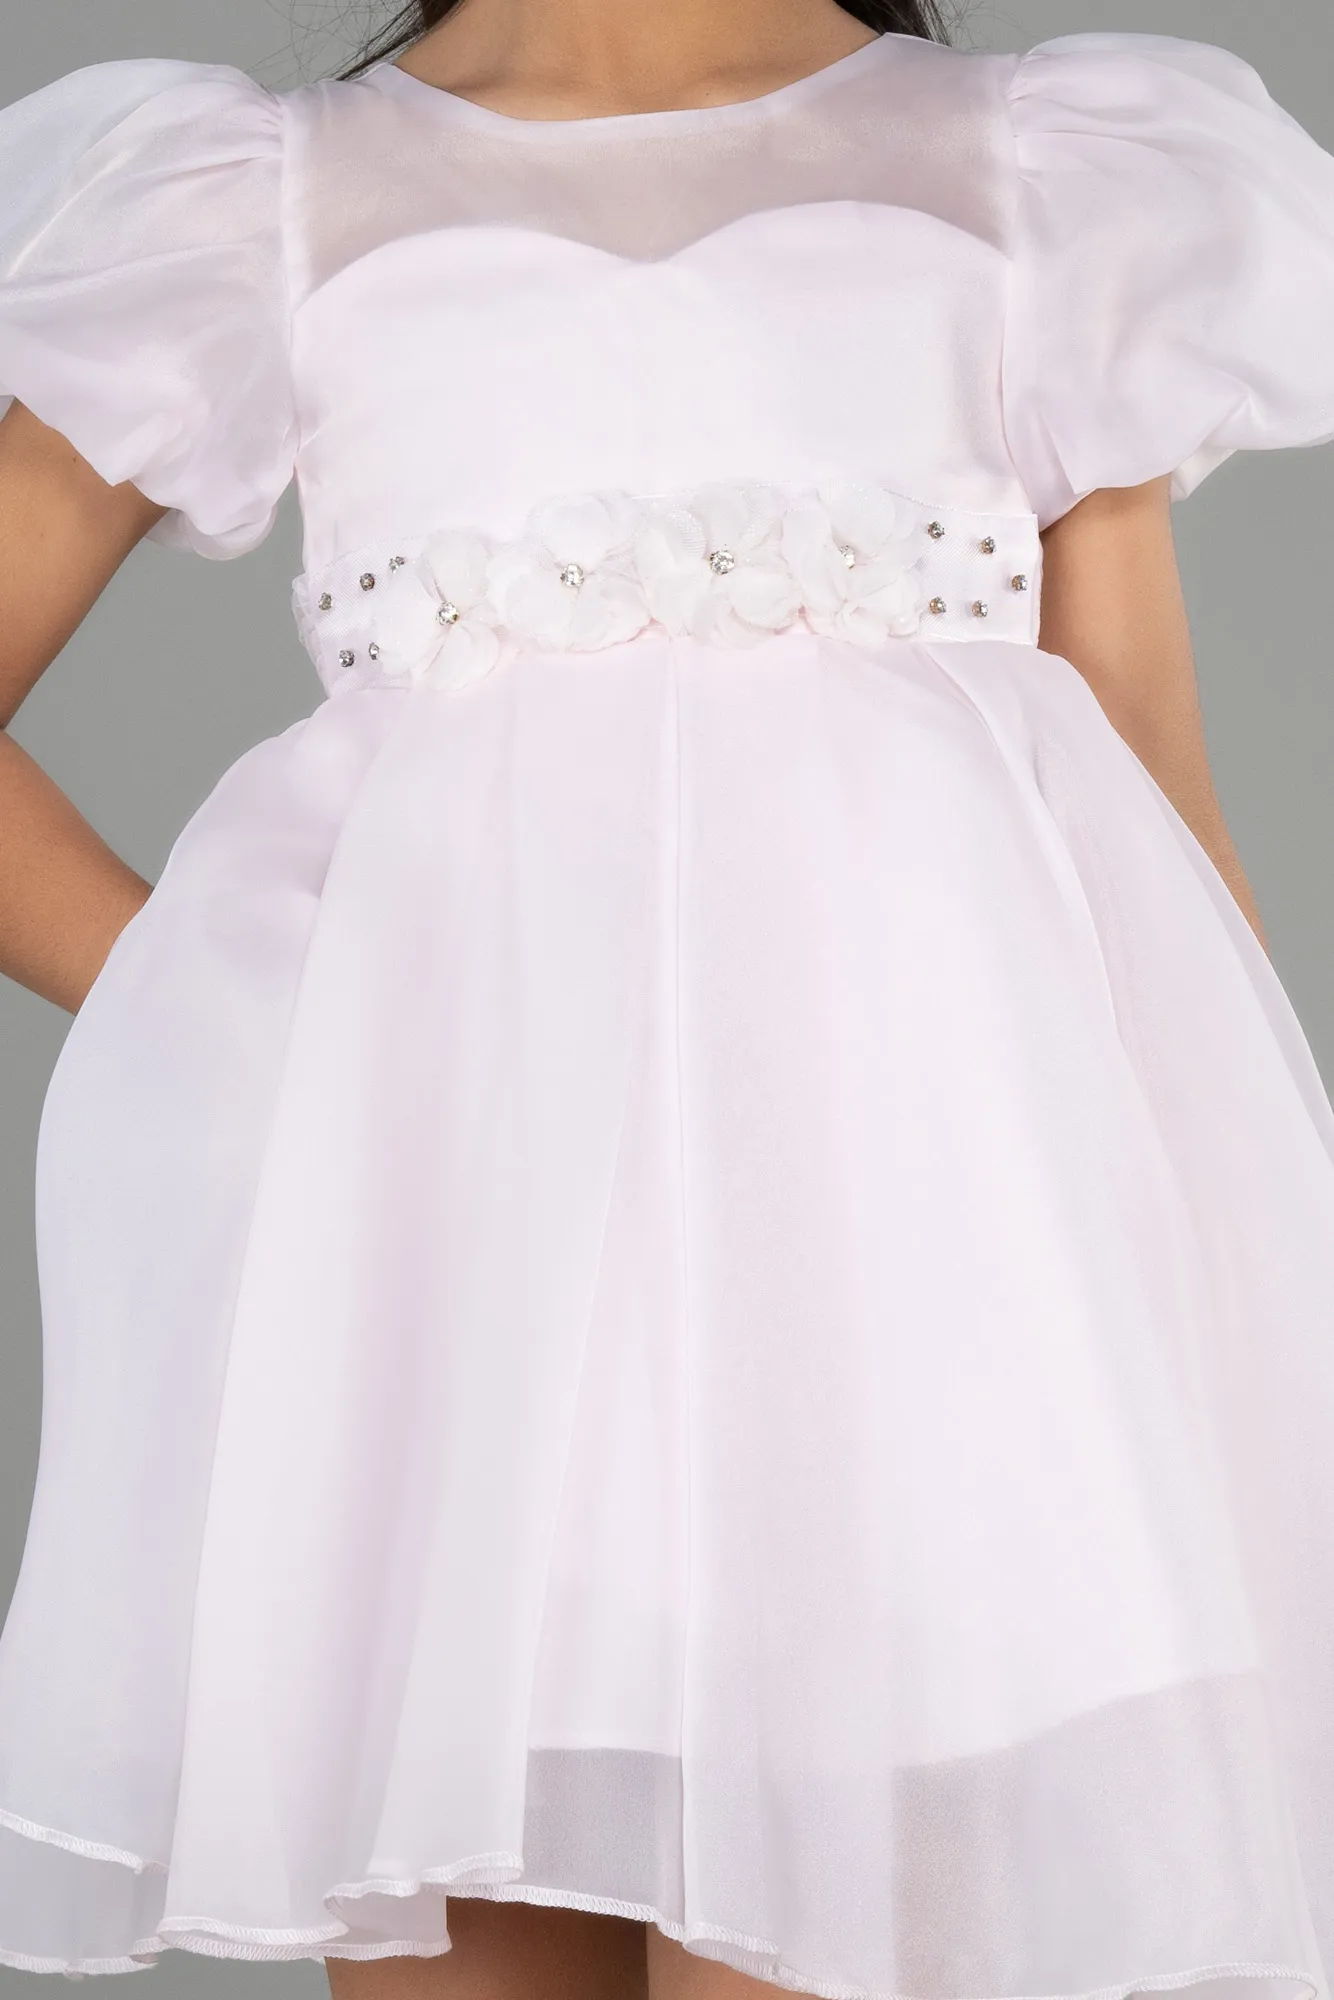 Powder Color-Long Girl Dress ABU3791